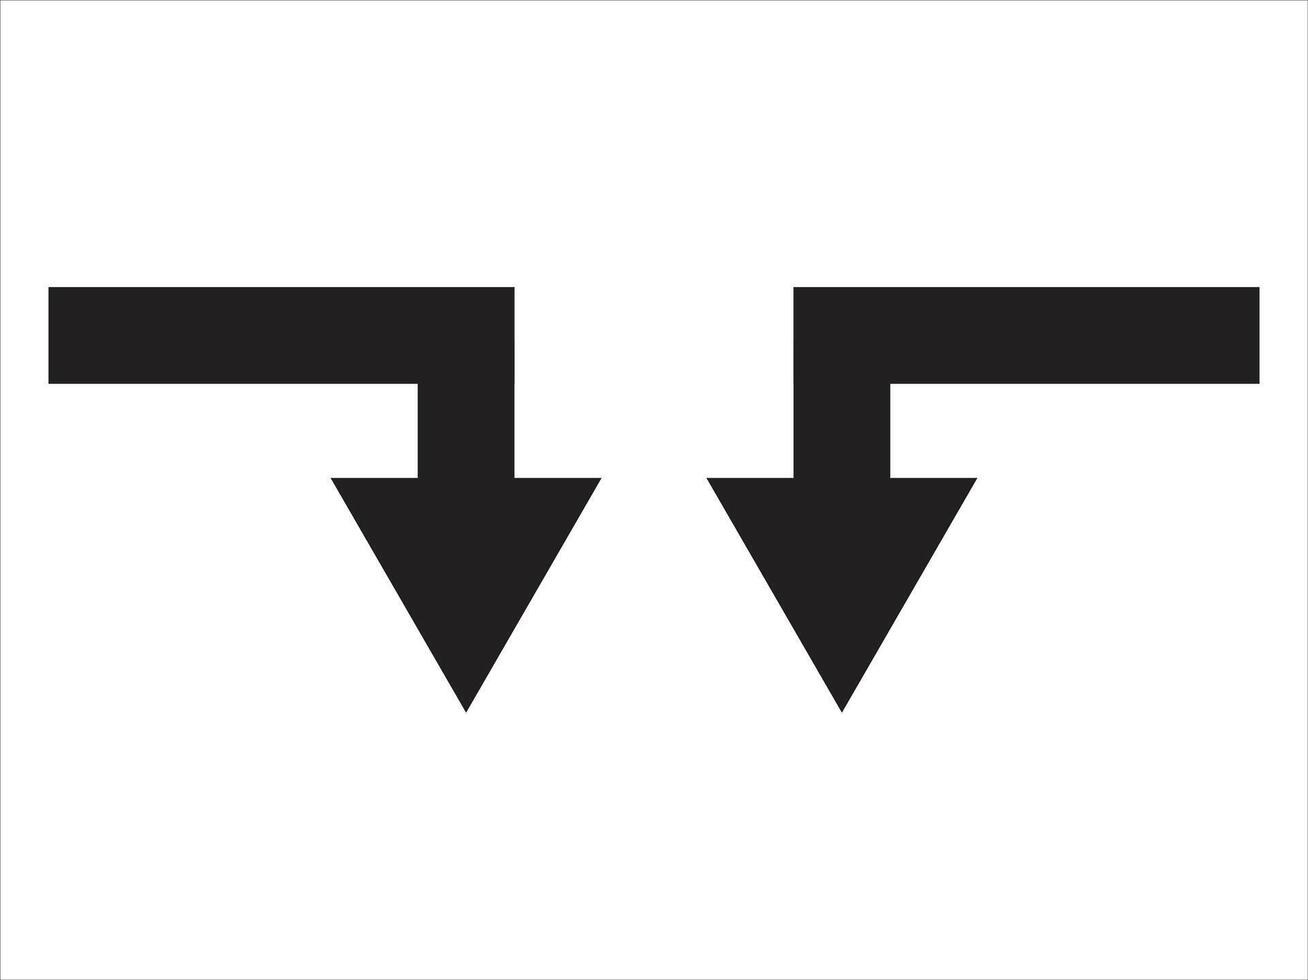 Arrow icon in Basic straight flat style. Vector illustration.